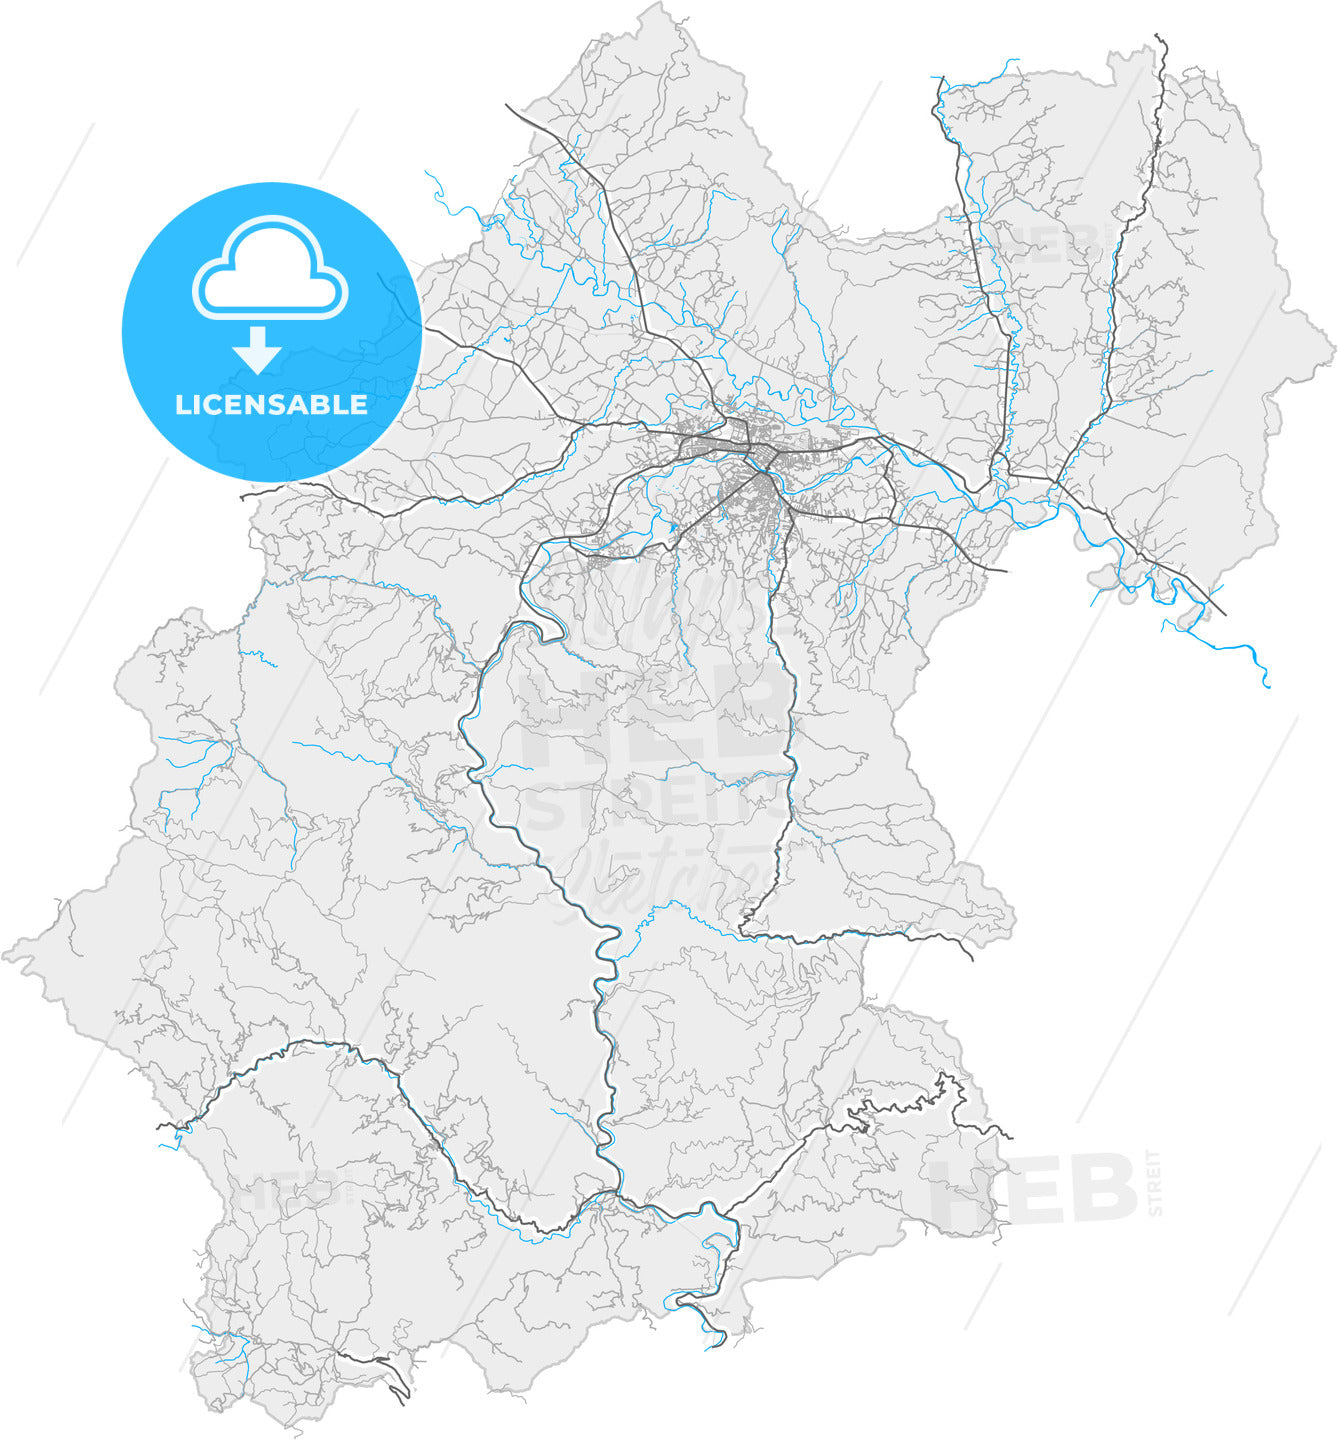 Kraljevo, Raška, Serbia, high quality vector map